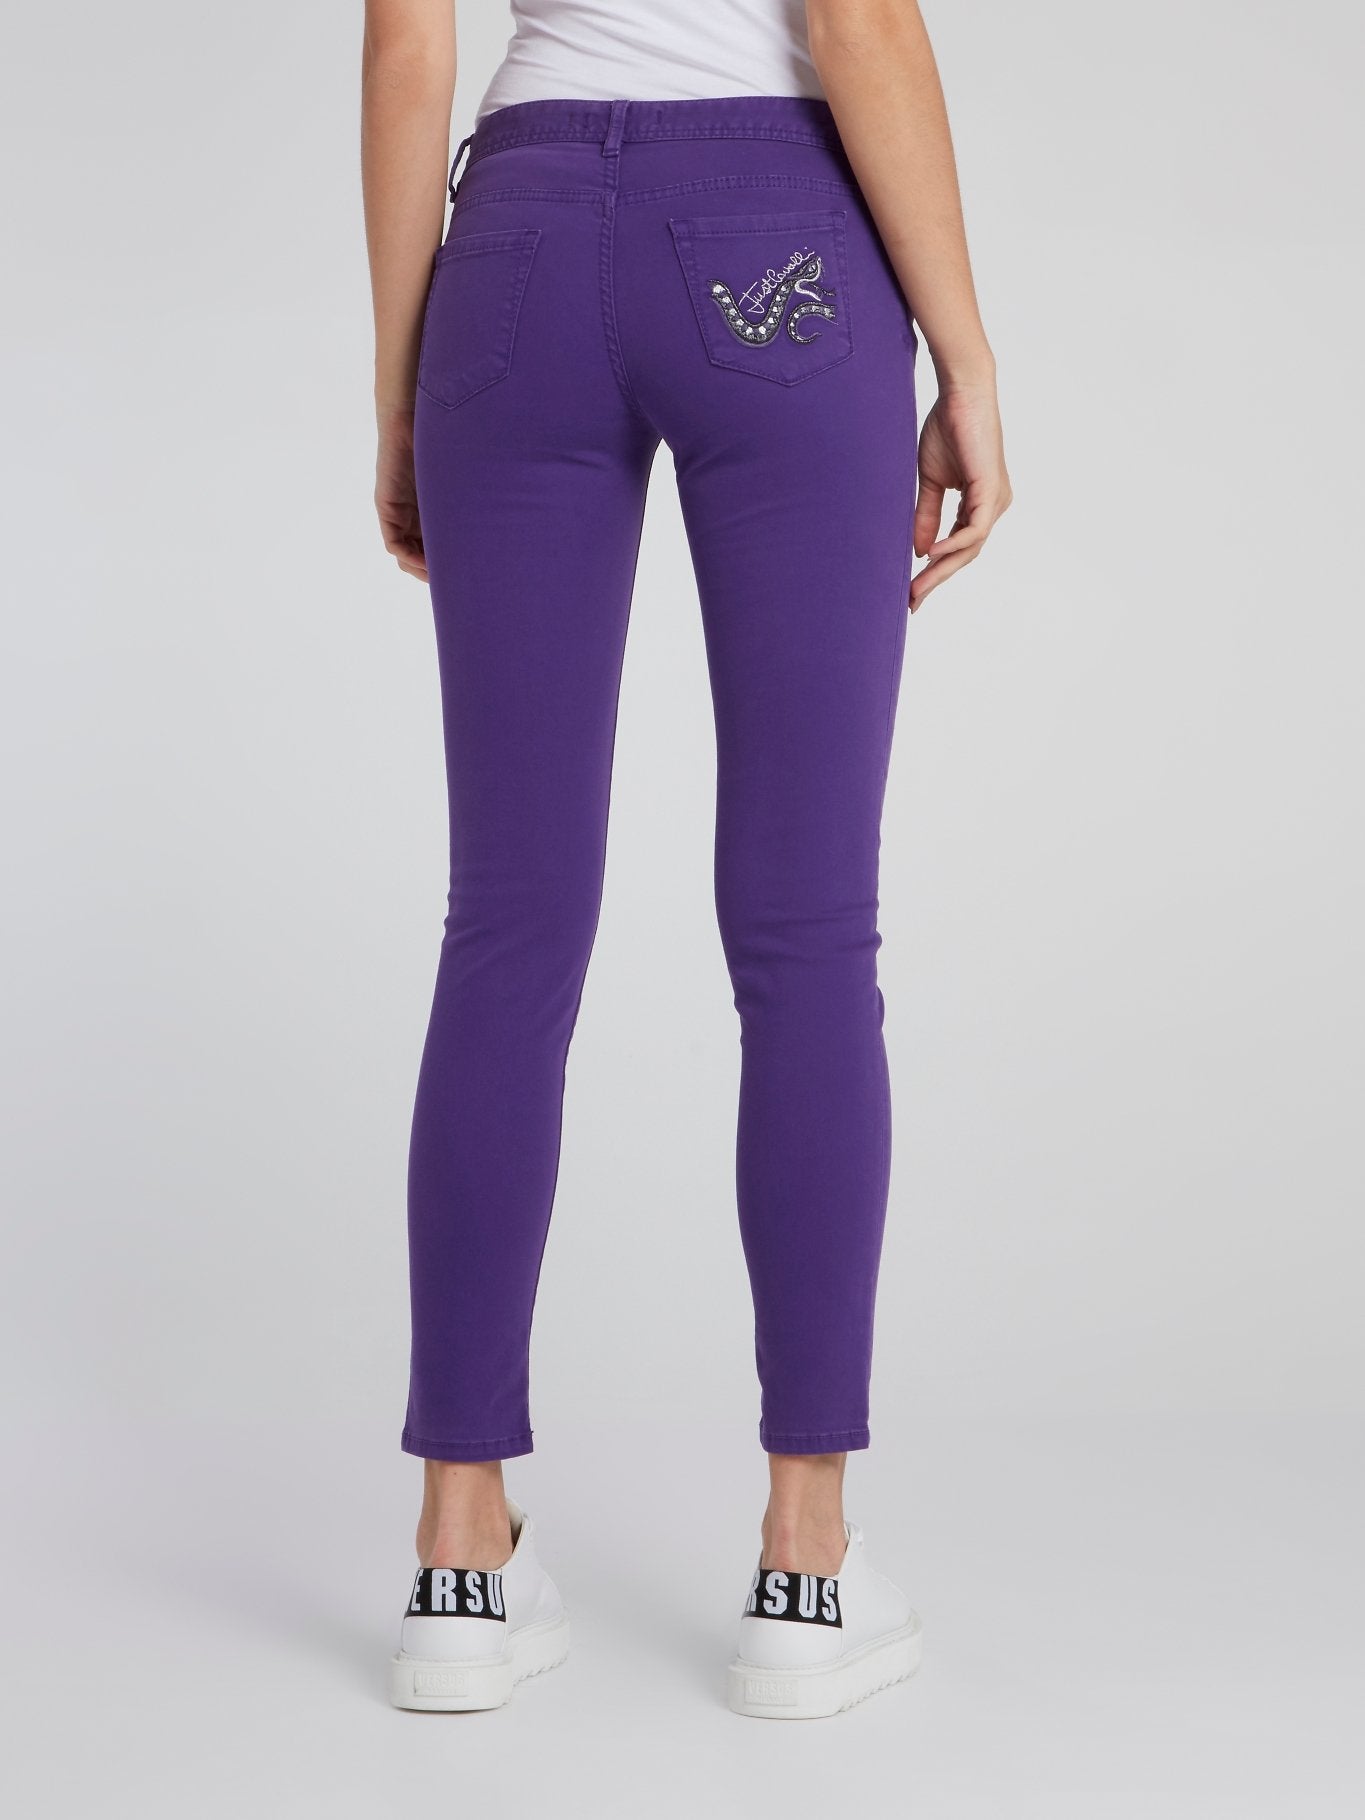 Purple Skinny Capri Pants